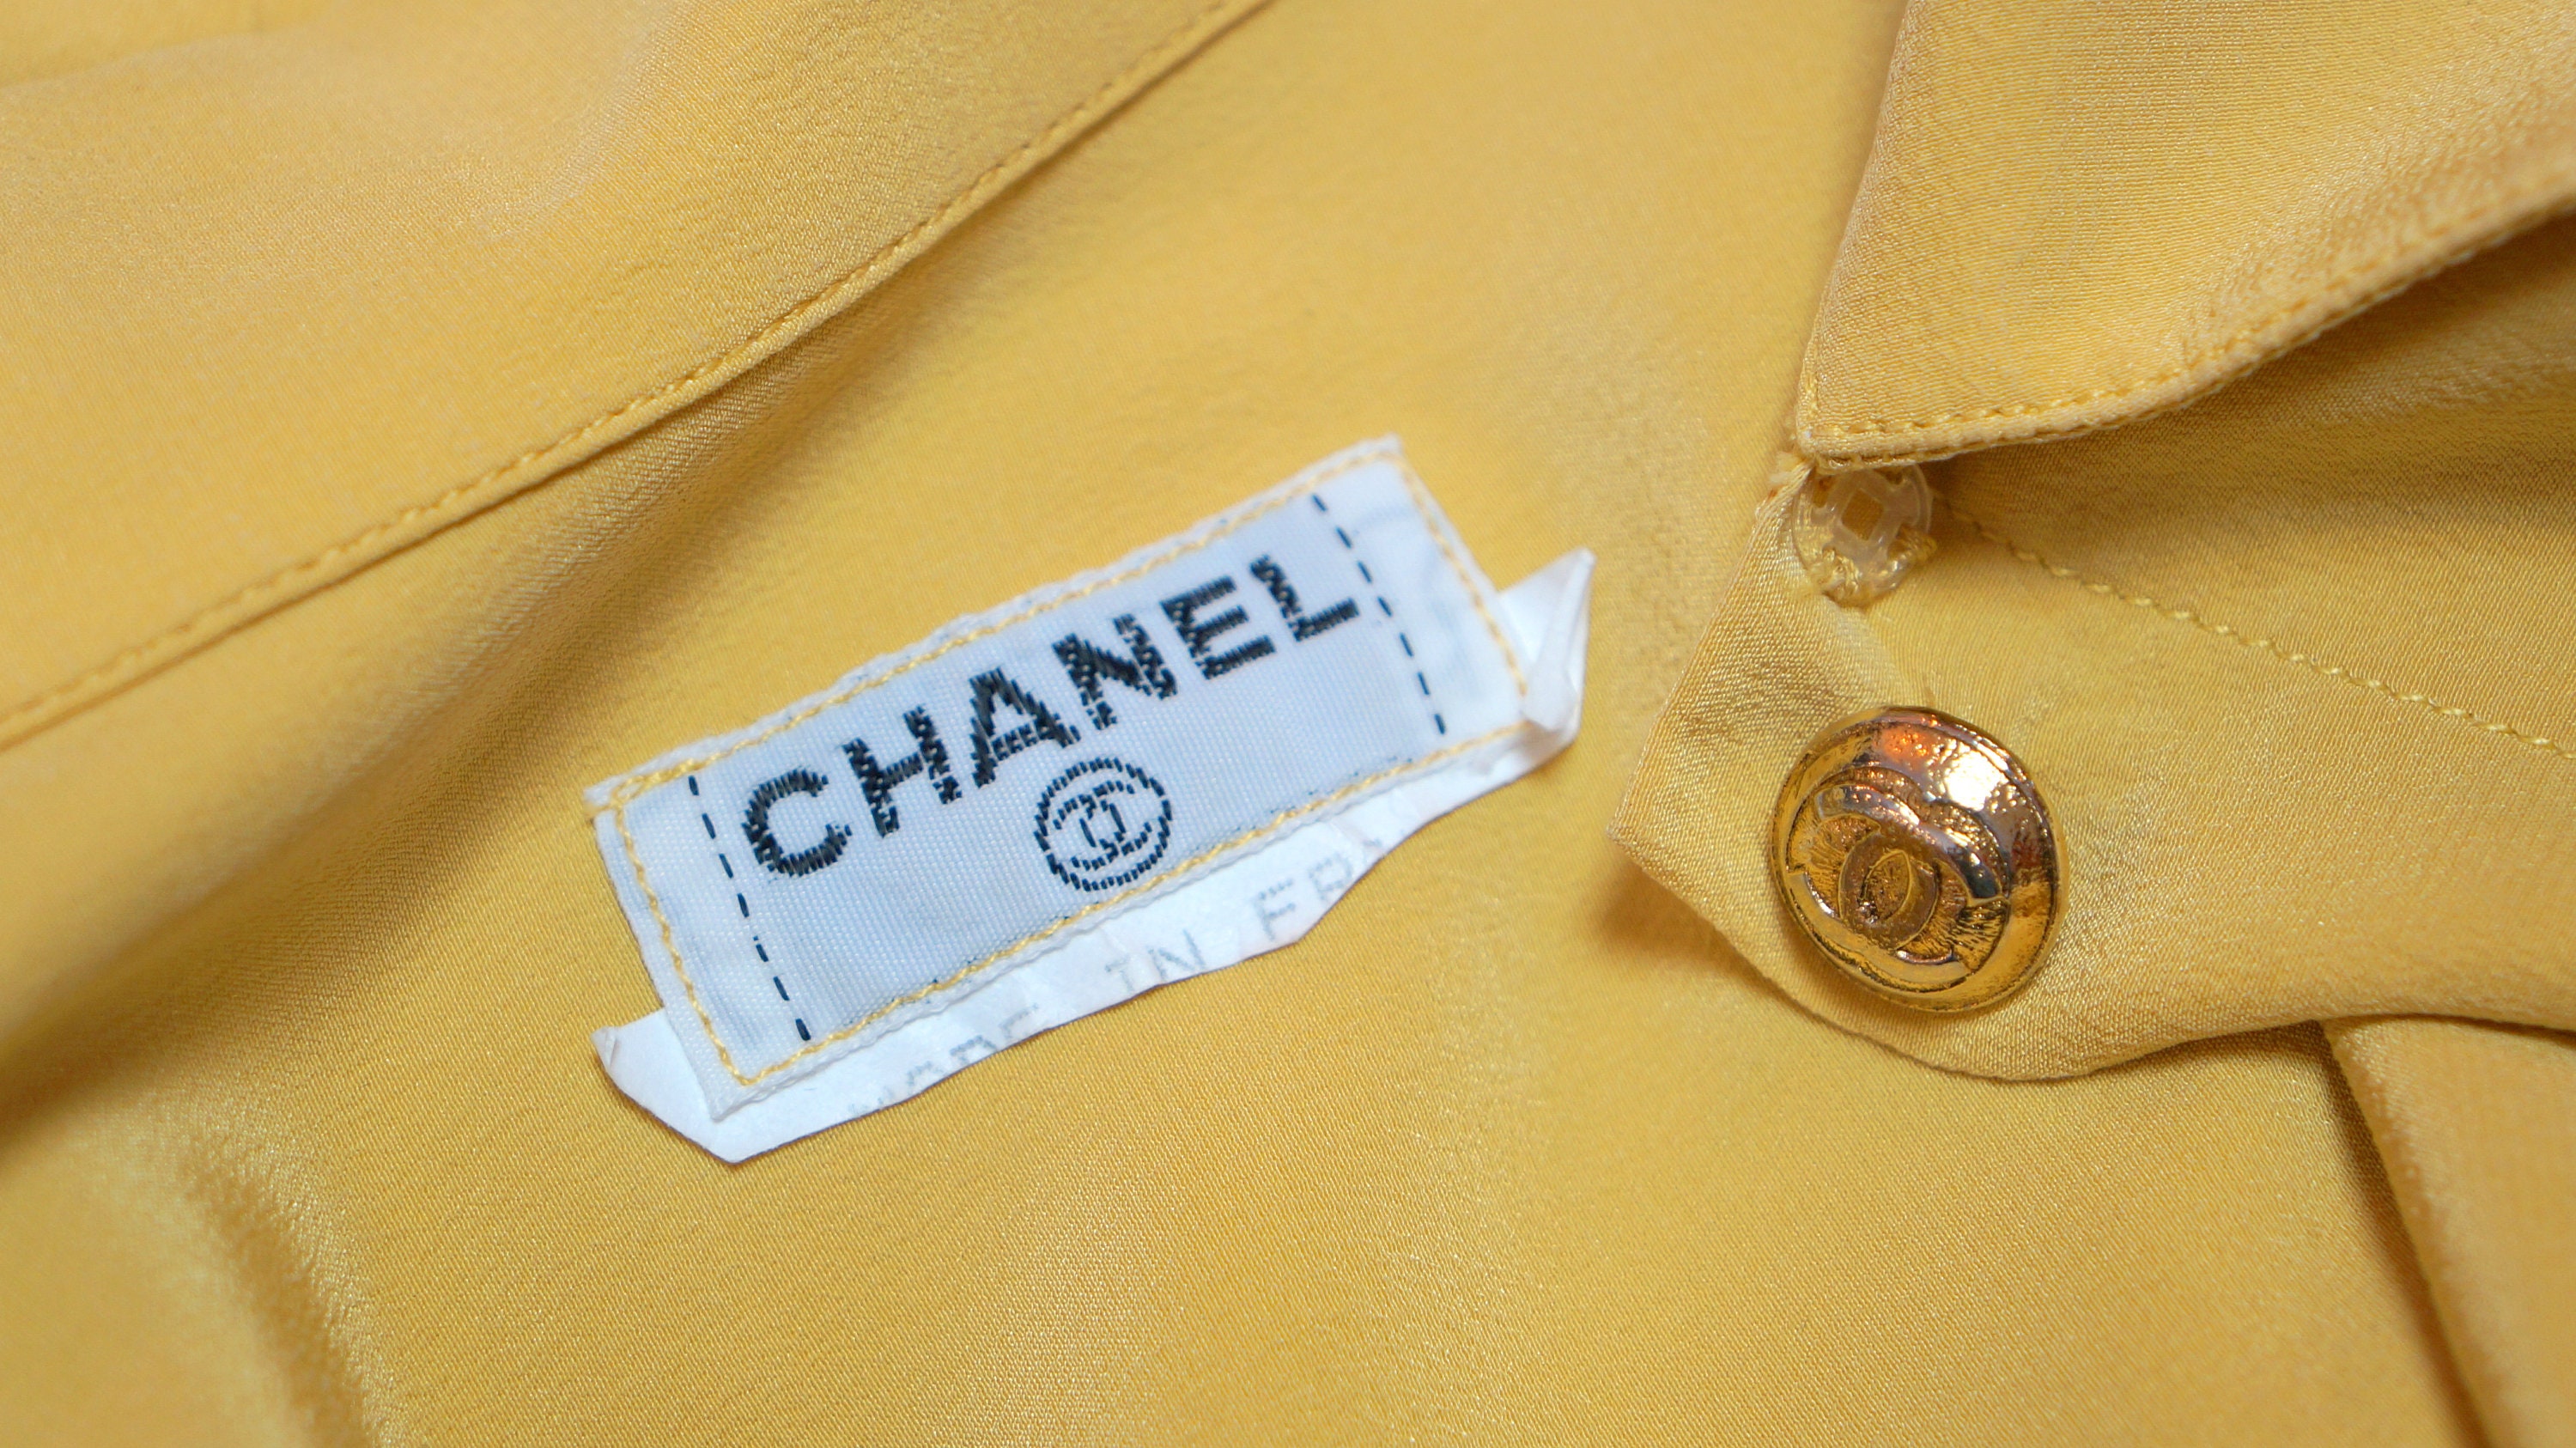 Vintage Chanel Blouse Silk Shirt Yellow Shirt Blouse Pleats 